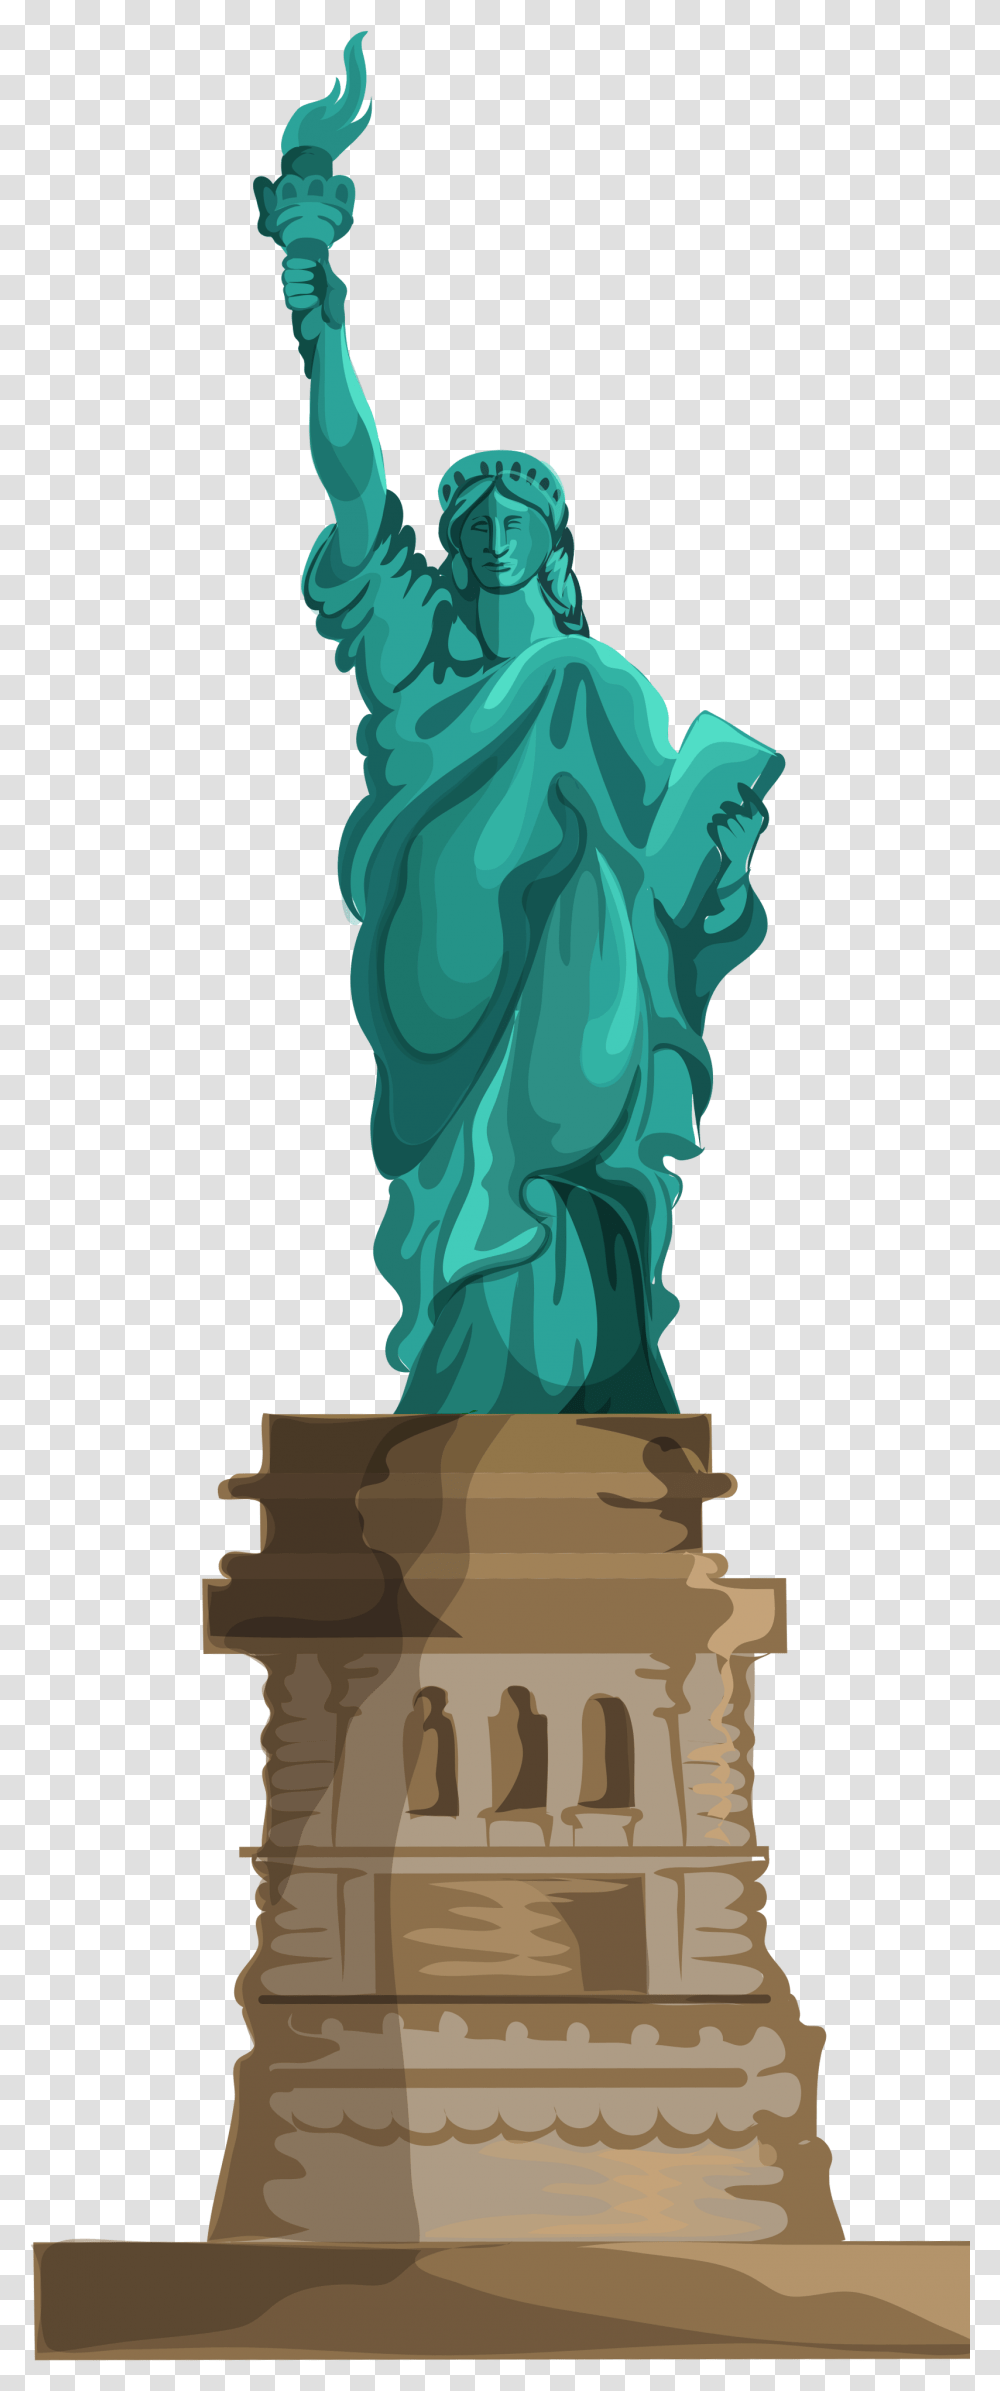 Liberty Statue Statue Of Liberty Clipart, Sculpture, Person, Human, Wedding Cake Transparent Png